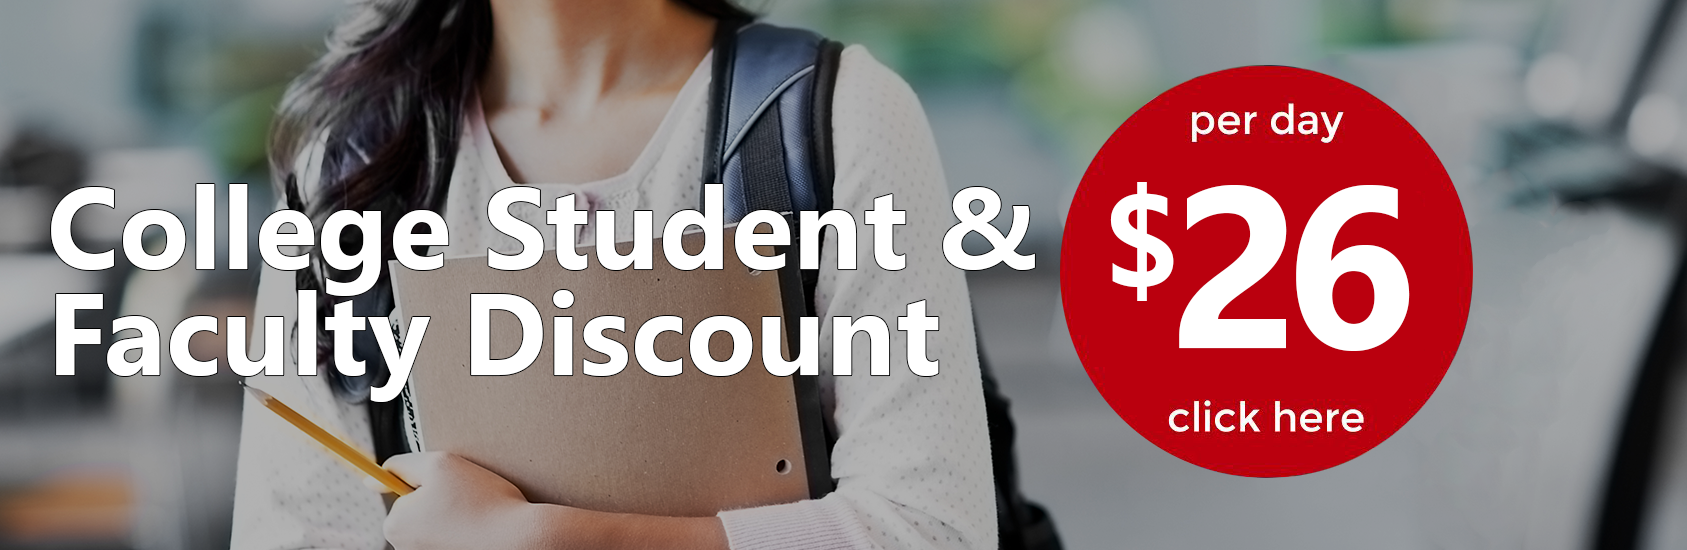 College Student Discount